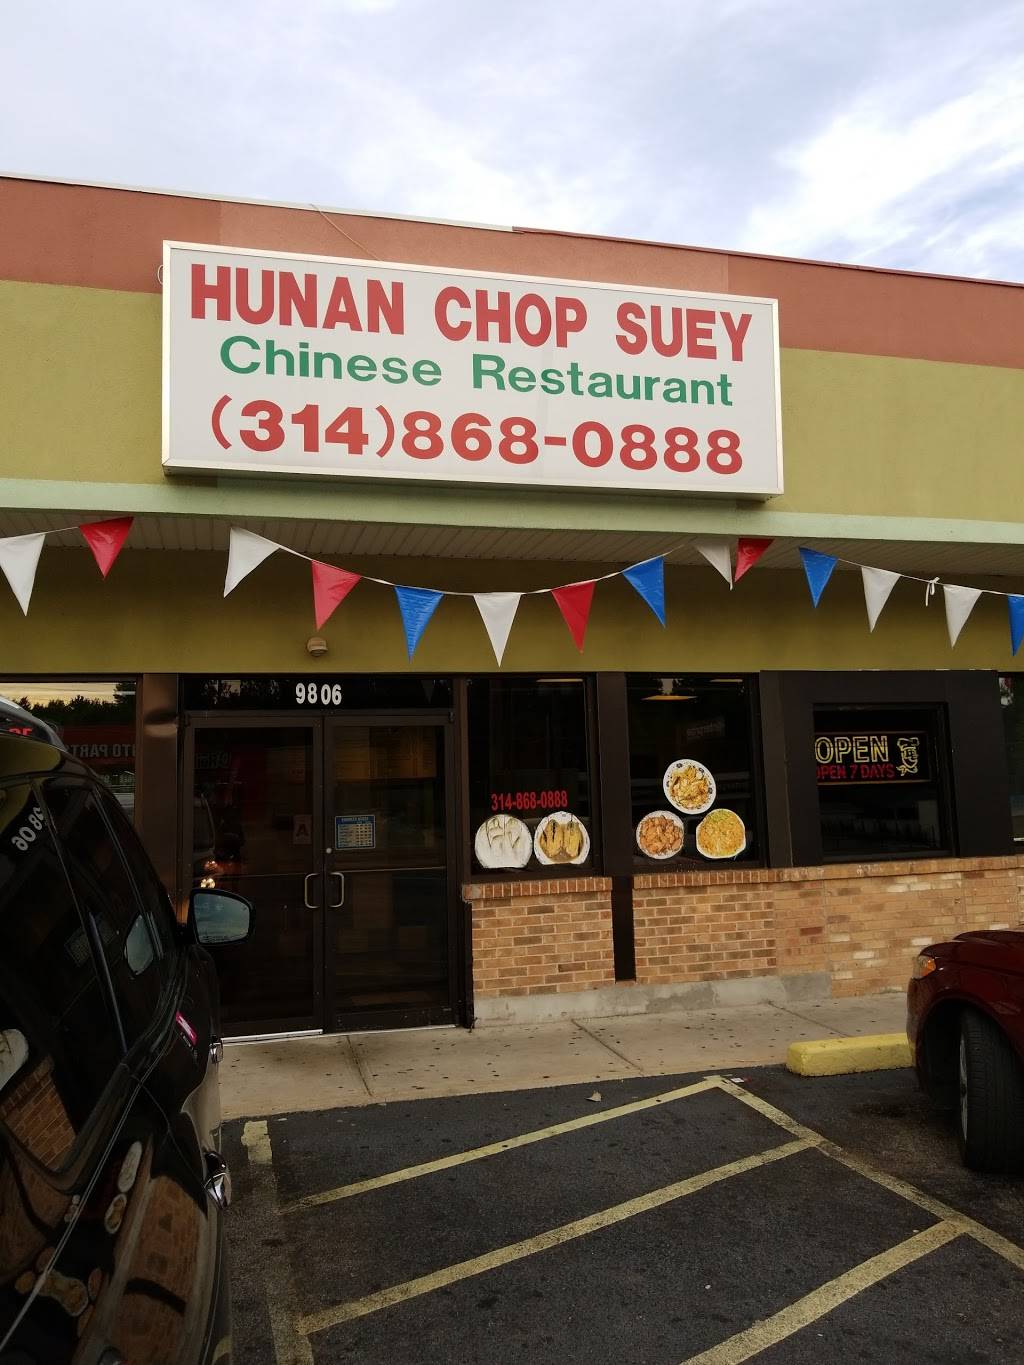 Hunan Chop Suey Chinese Restaurant | Photo 2 of 9 | Address: 9806 W Florissant Ave, St. Louis, MO 63136, USA | Phone: (314) 868-0888